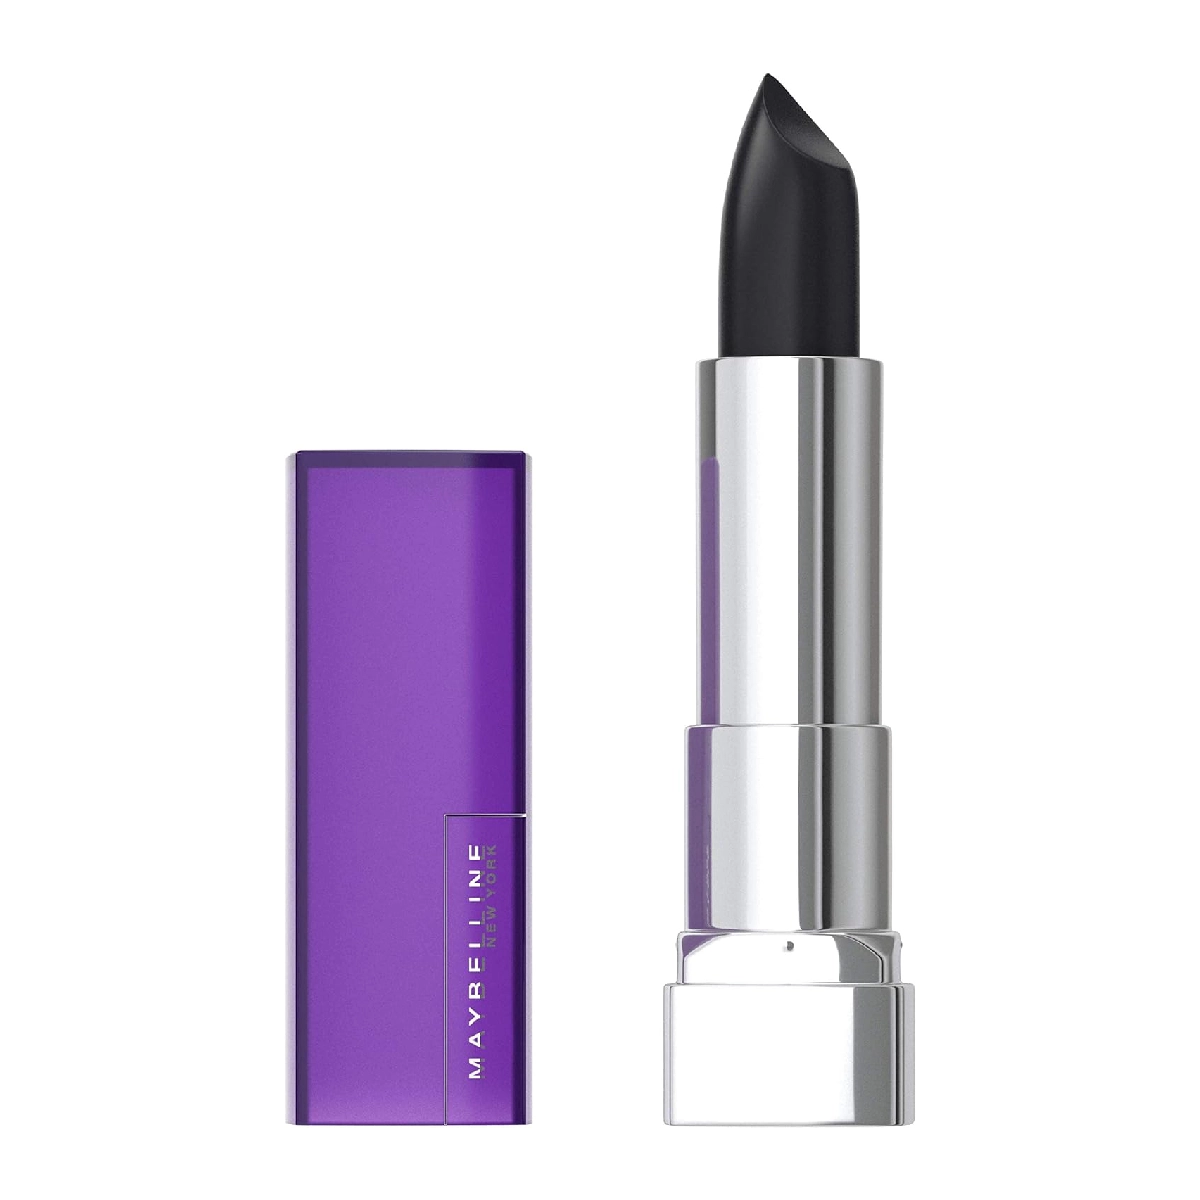 Maybelline Color Sensational Lipstick in Matte Finish - lipstick tube against a white background.